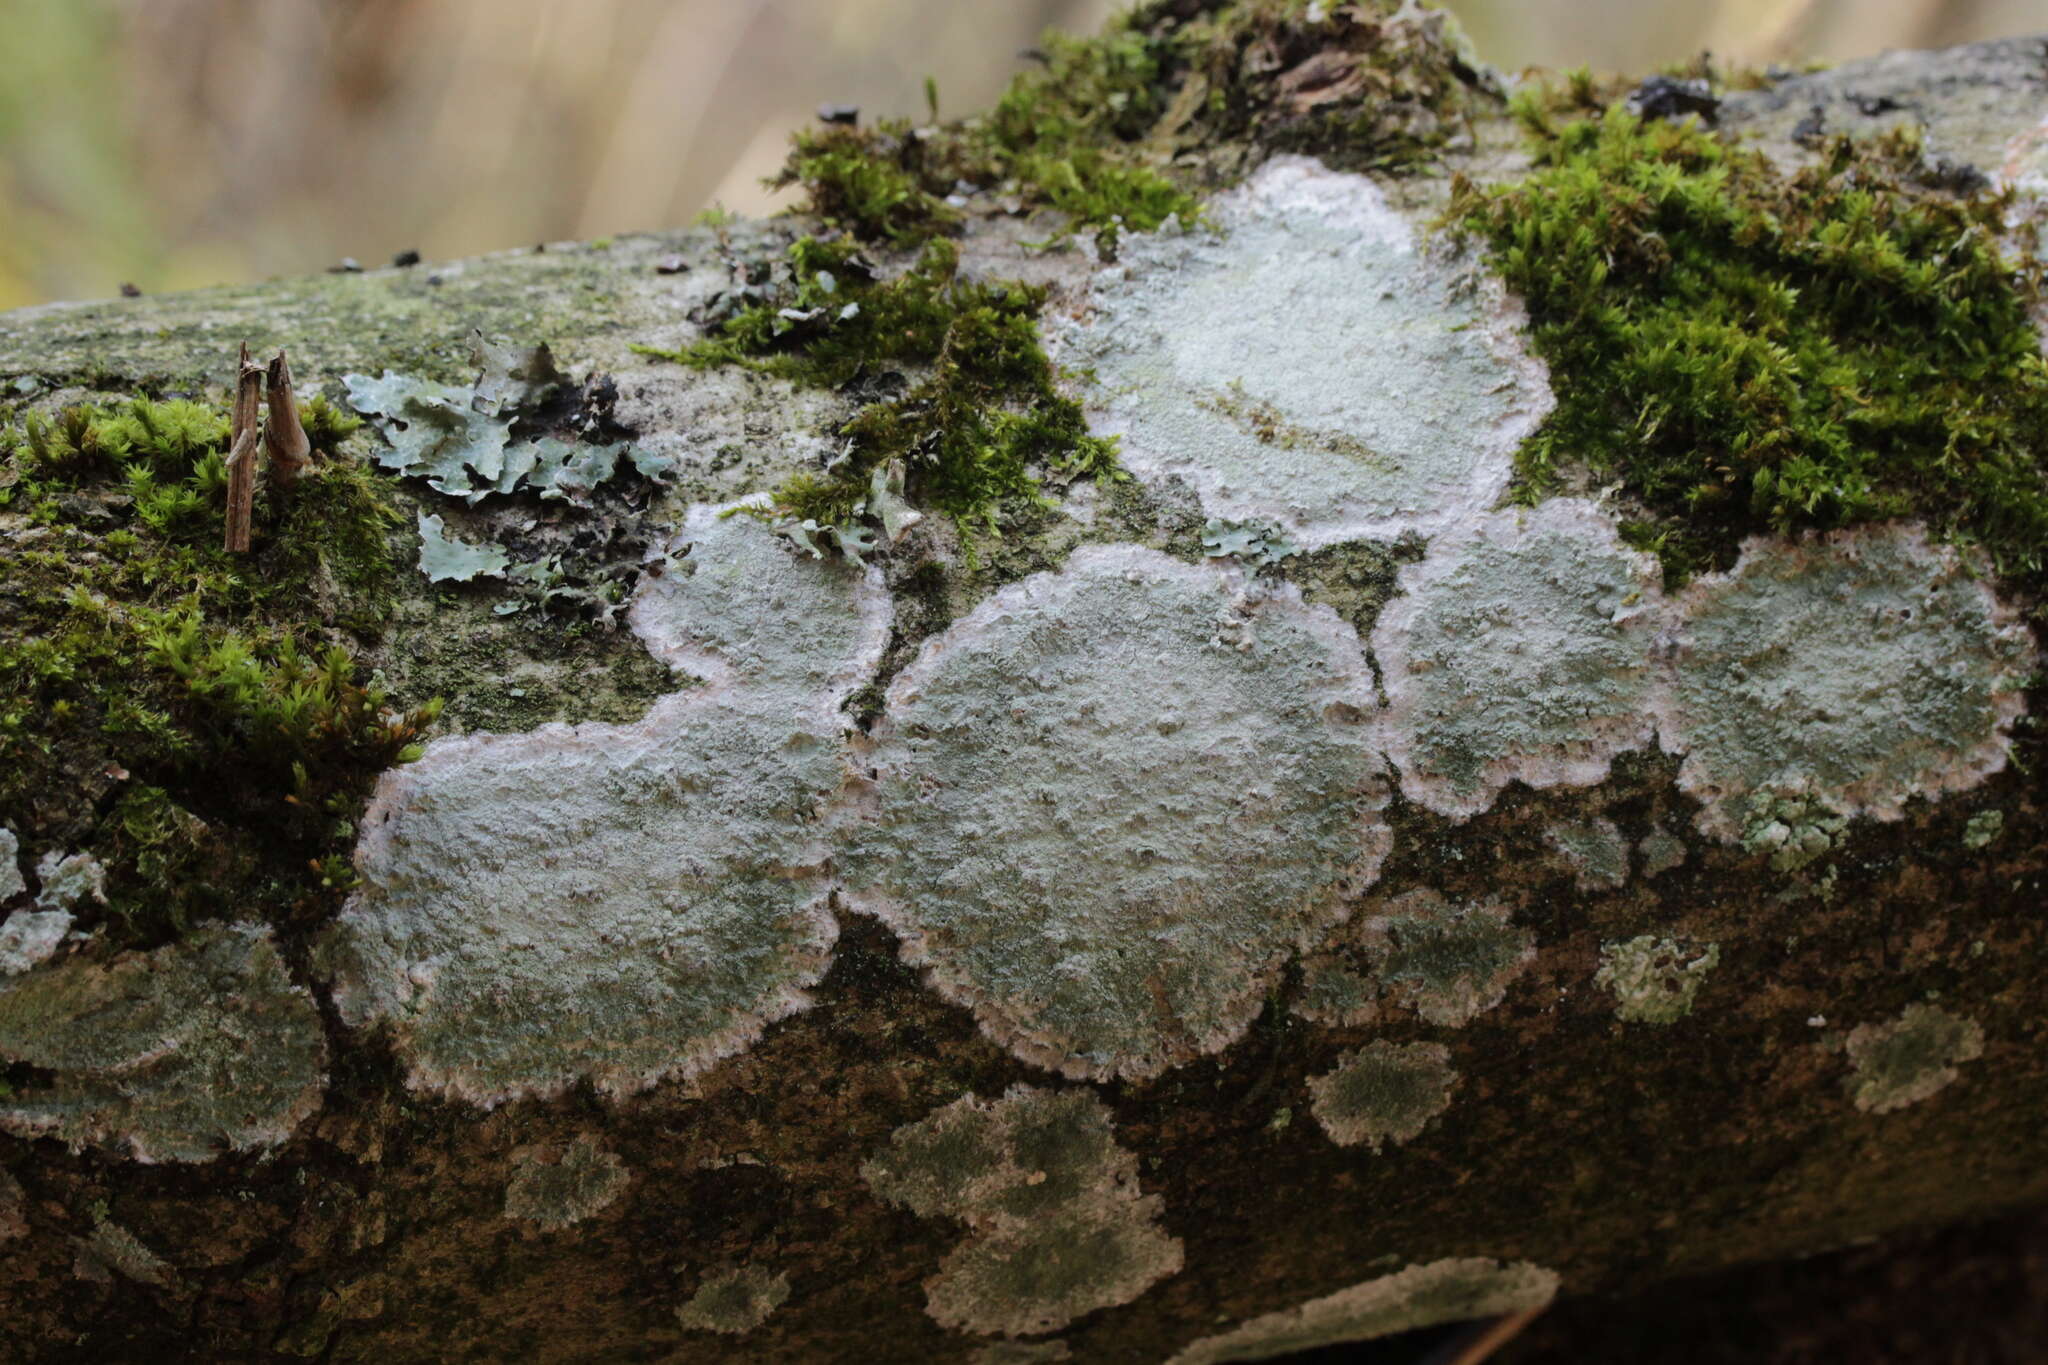 Image of blemished lichen